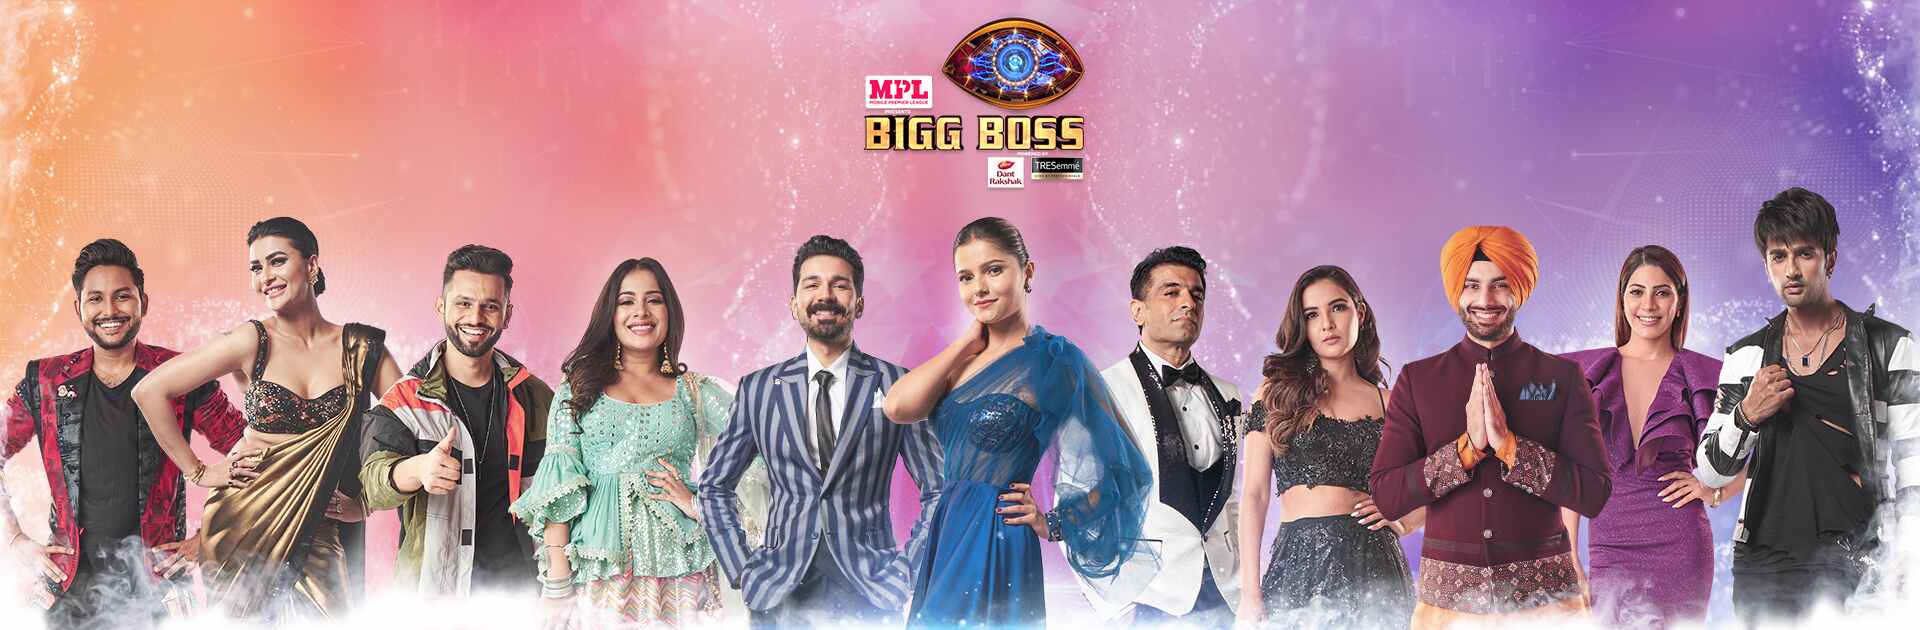 Bigg Boss 14 Contestants List 2020 Confirmed Bigg Boss Contestants 2020 Names With Photo